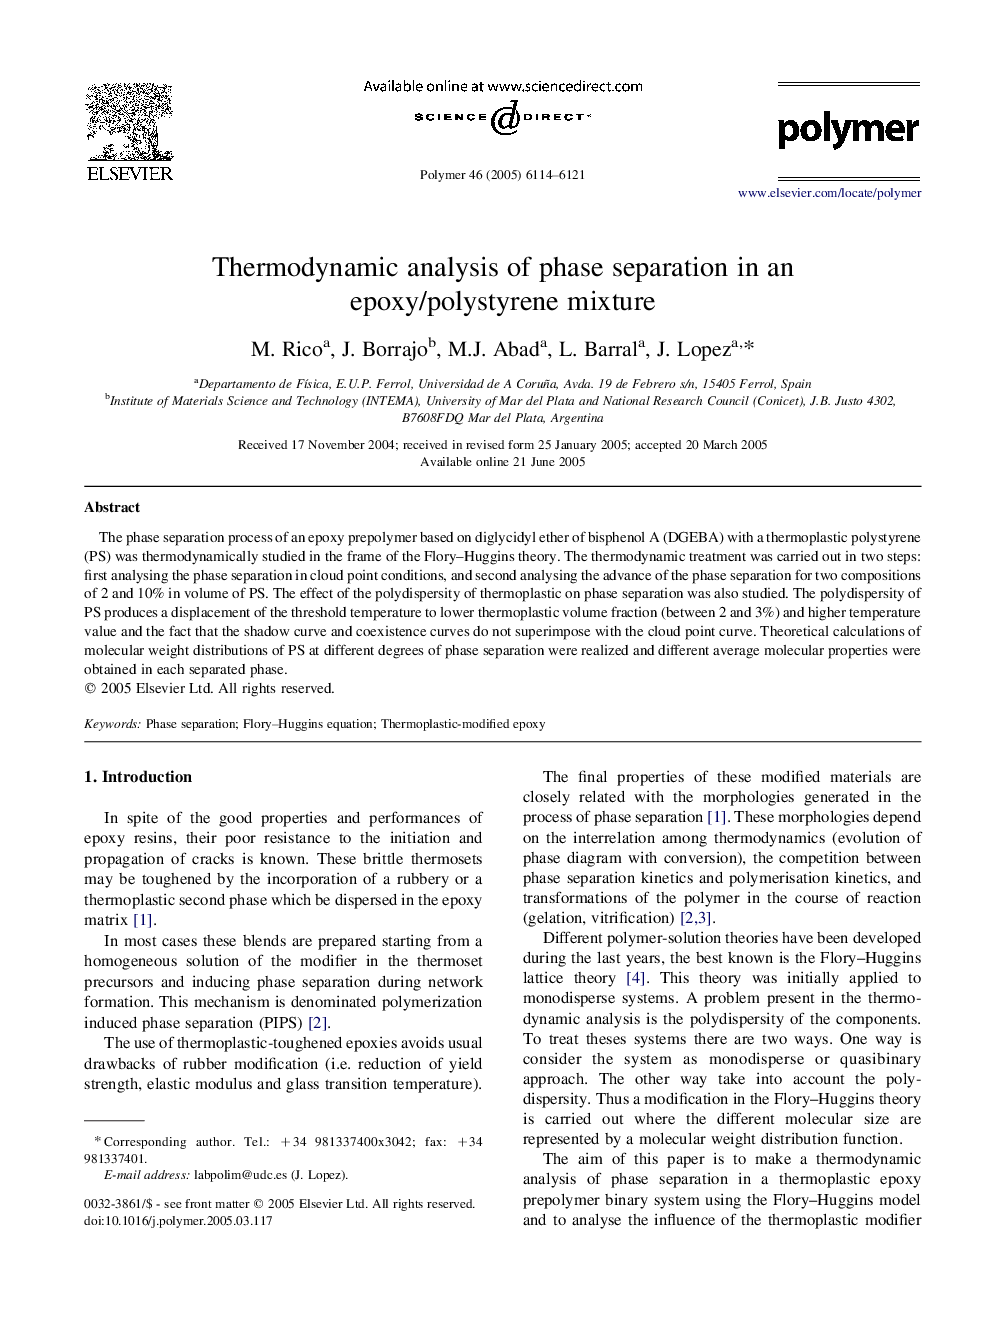 Thermodynamic analysis of phase separation in an epoxy/polystyrene mixture